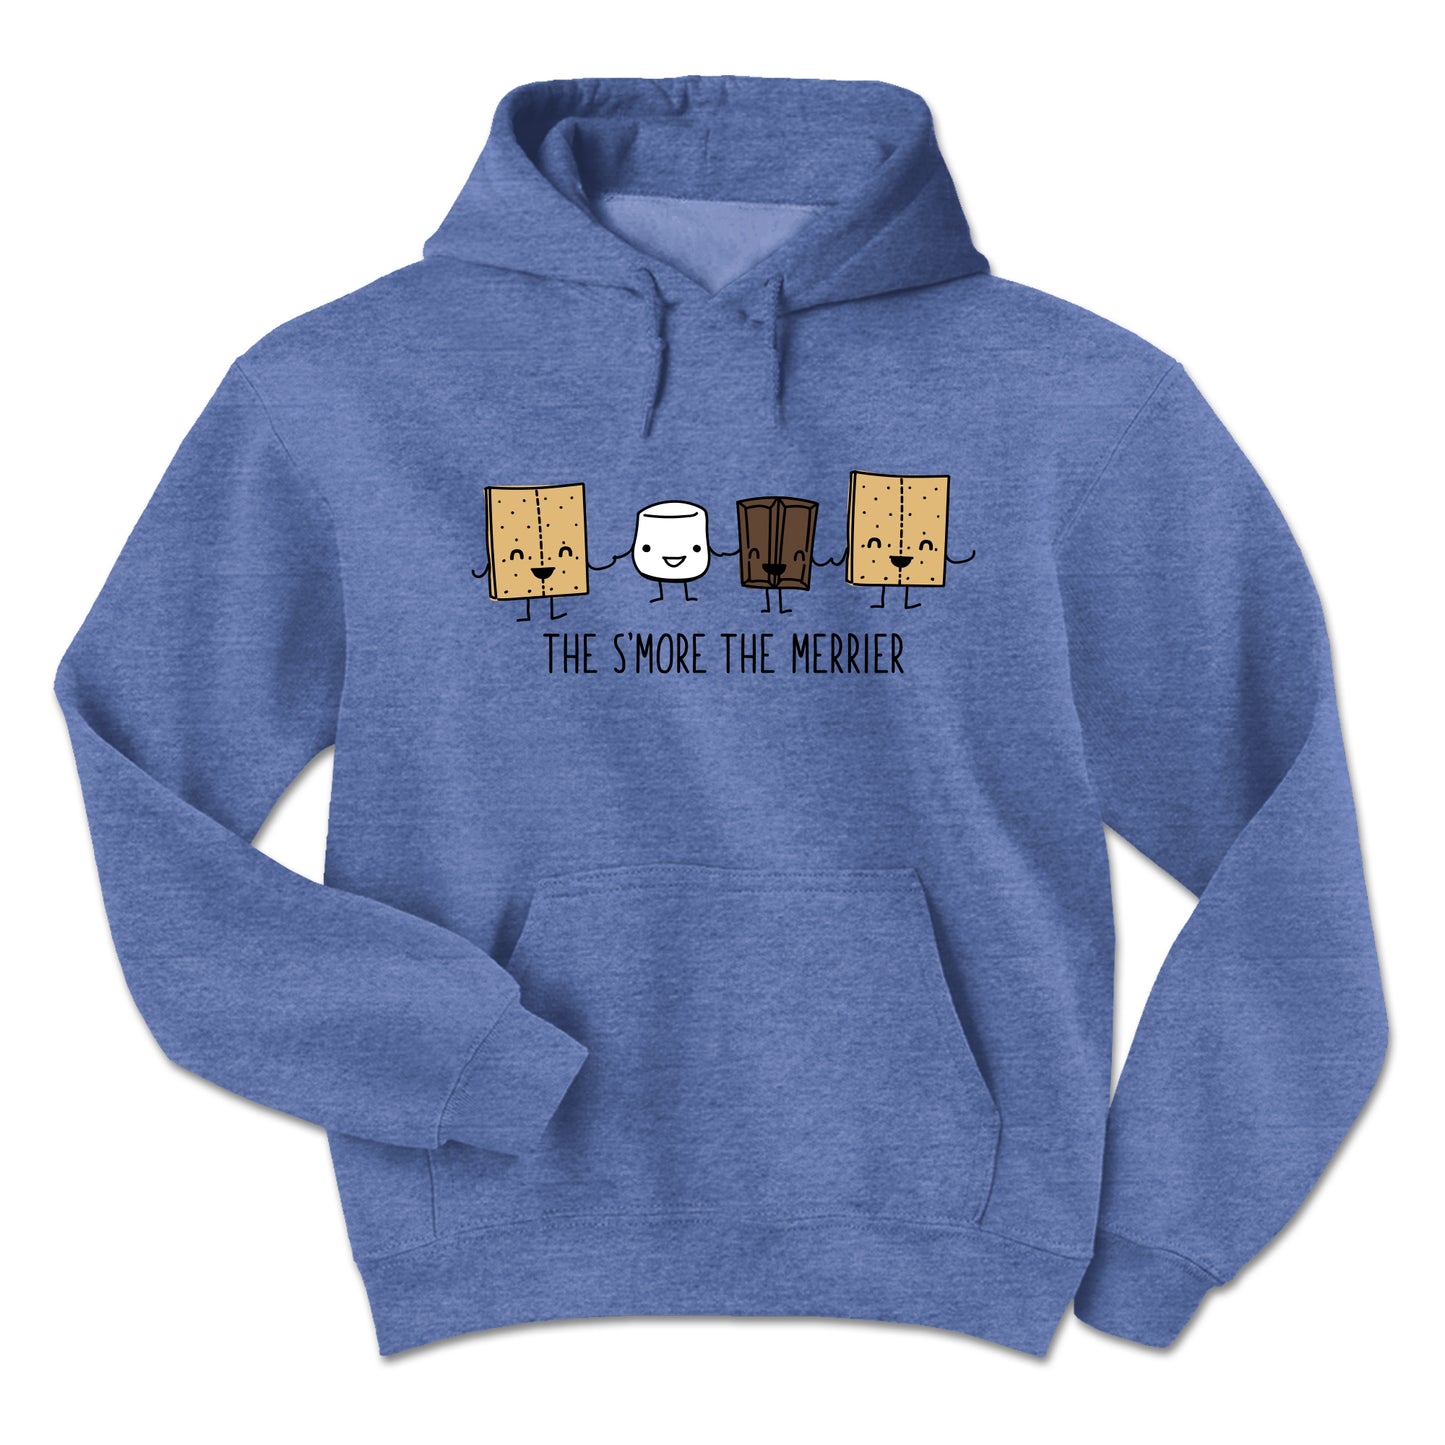 The S'more the Merrier Hooded Sweatshirt